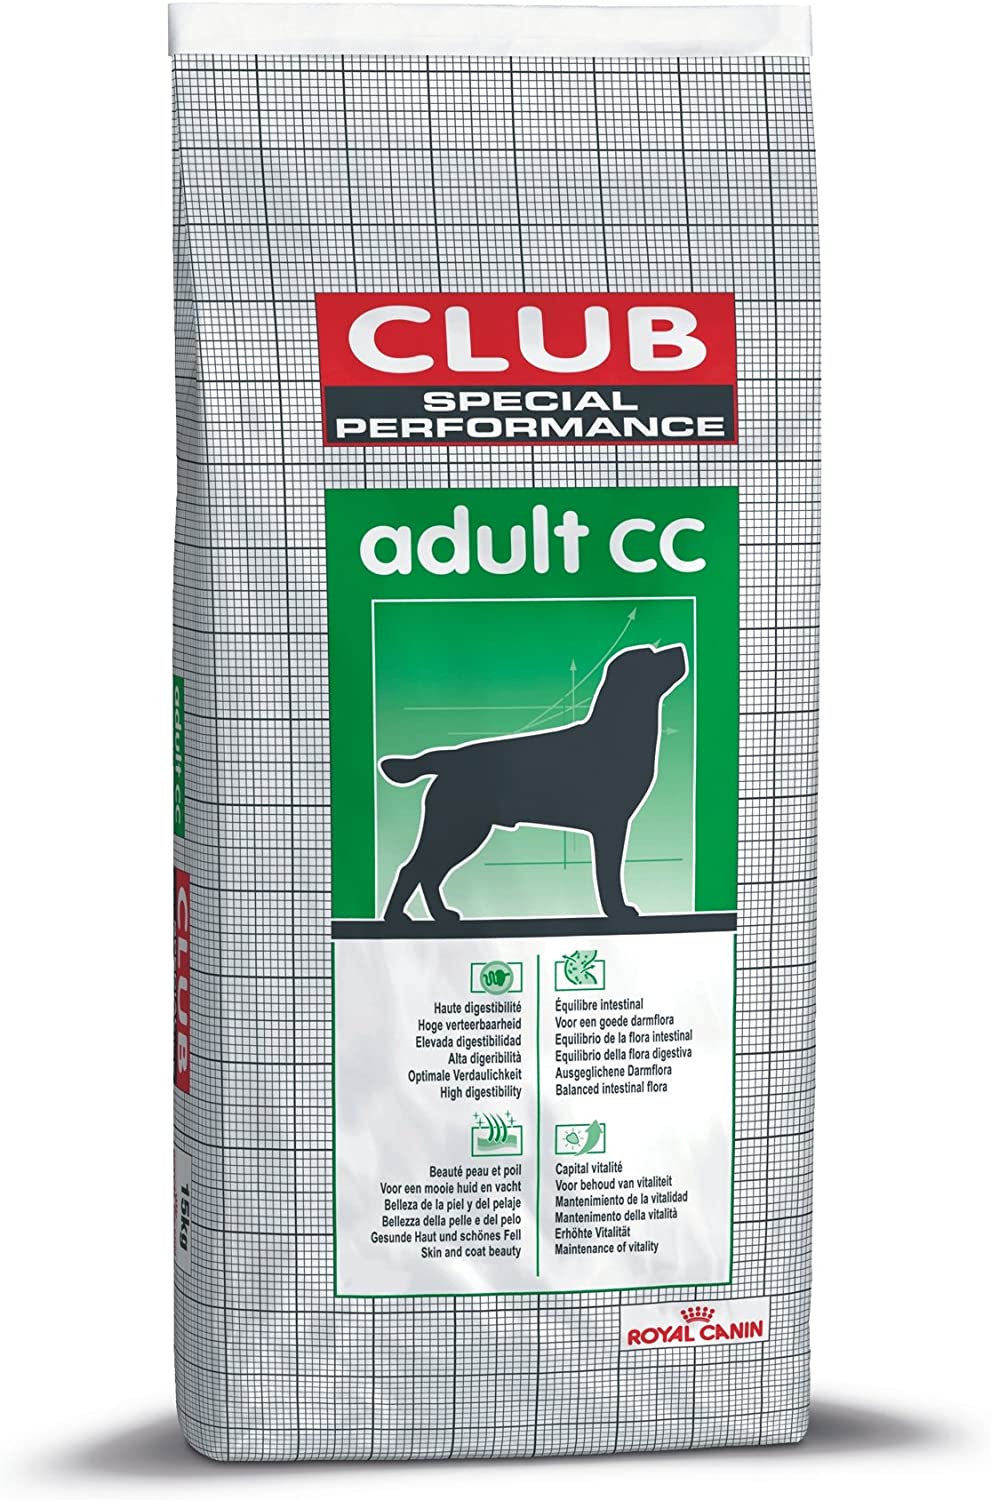  ROYAL CANIN Special Club Performance Adult CC - 15000 gr 